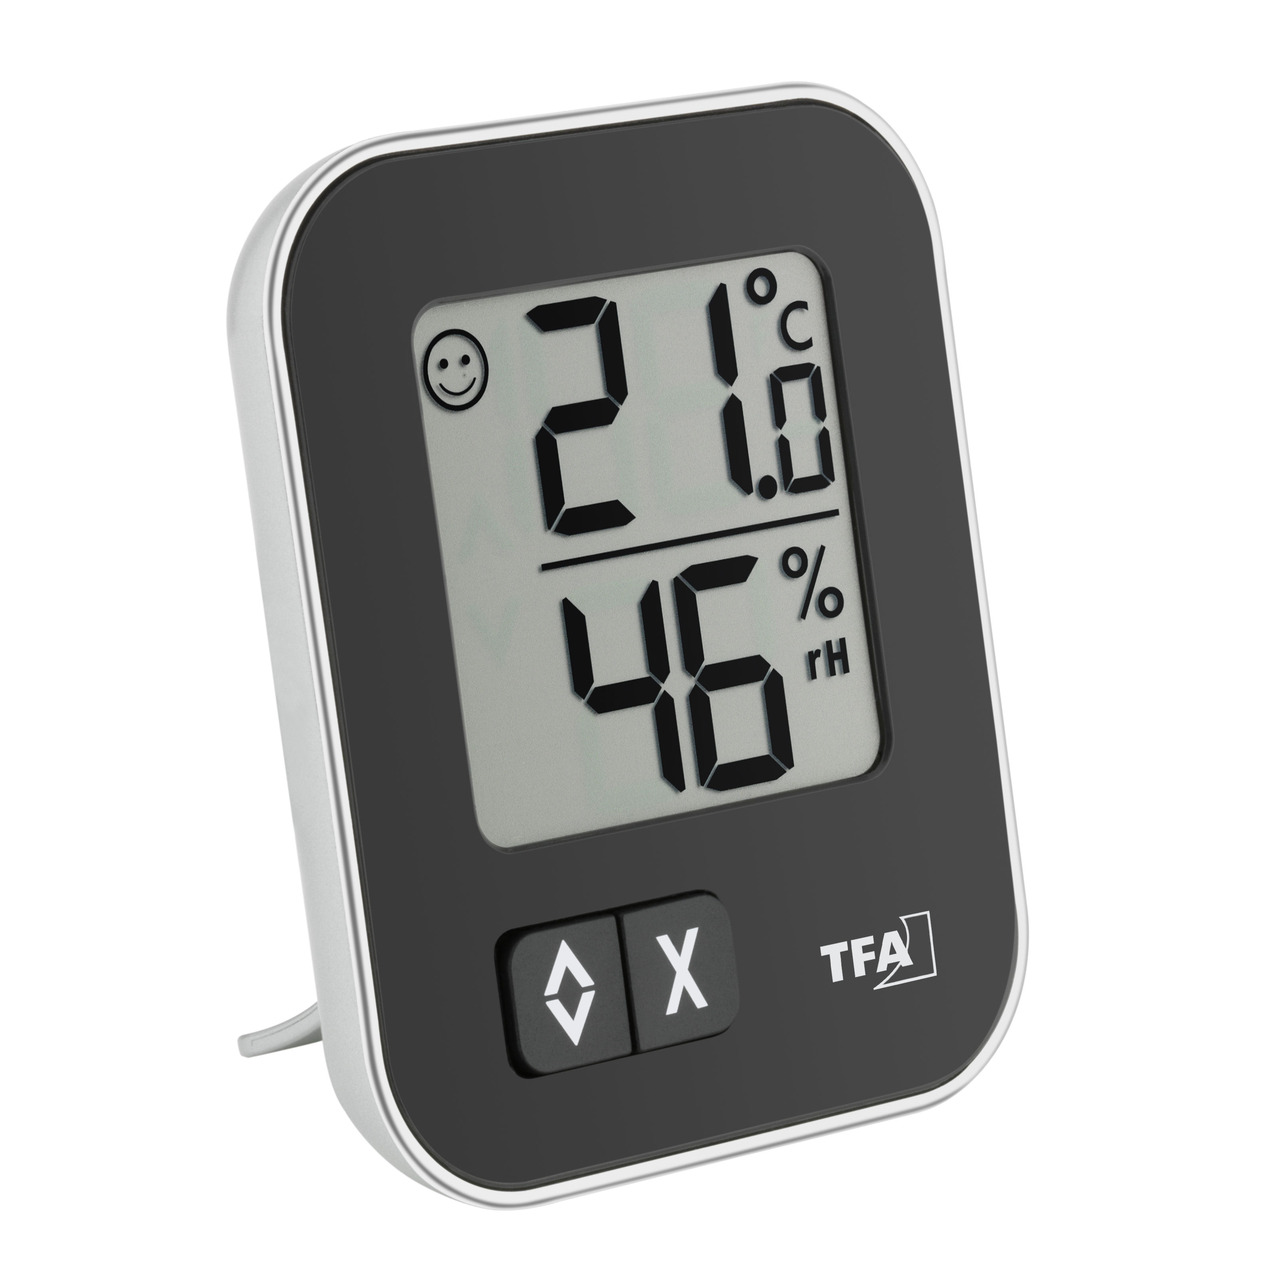 TFA digitales Thermo-Hygrometer MOXX